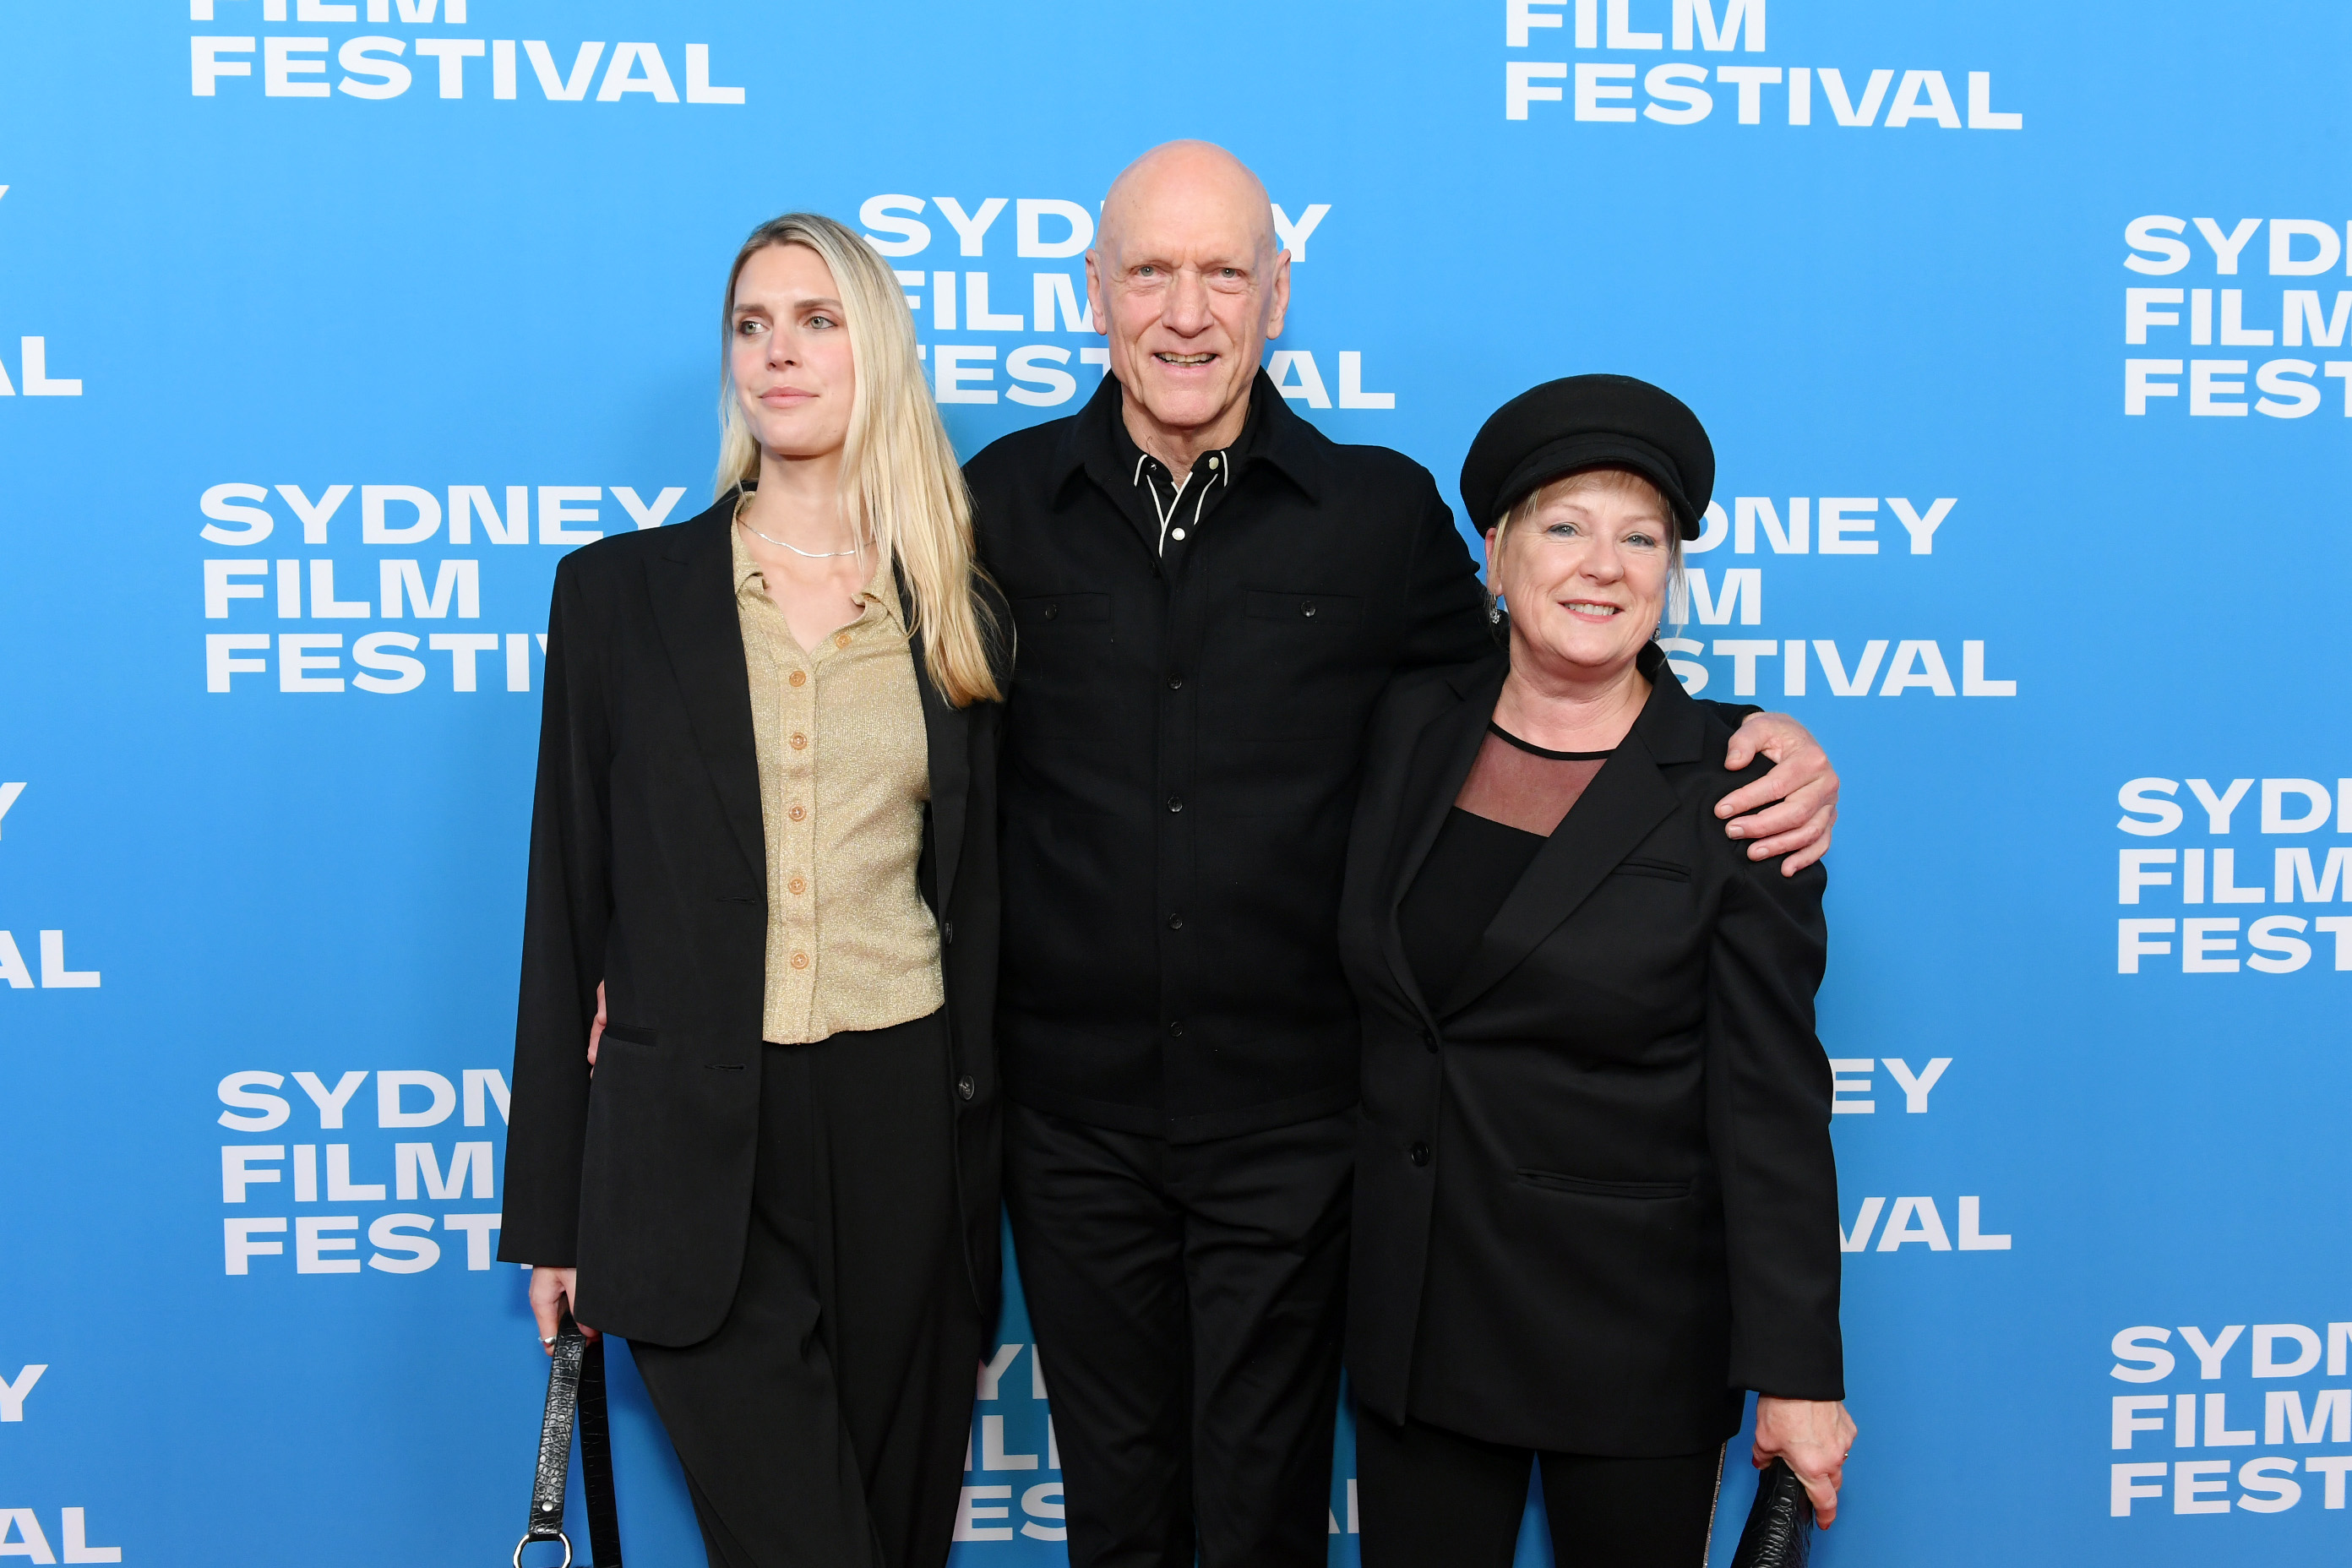 Event wrap-up: Sydney Film Festival opening night